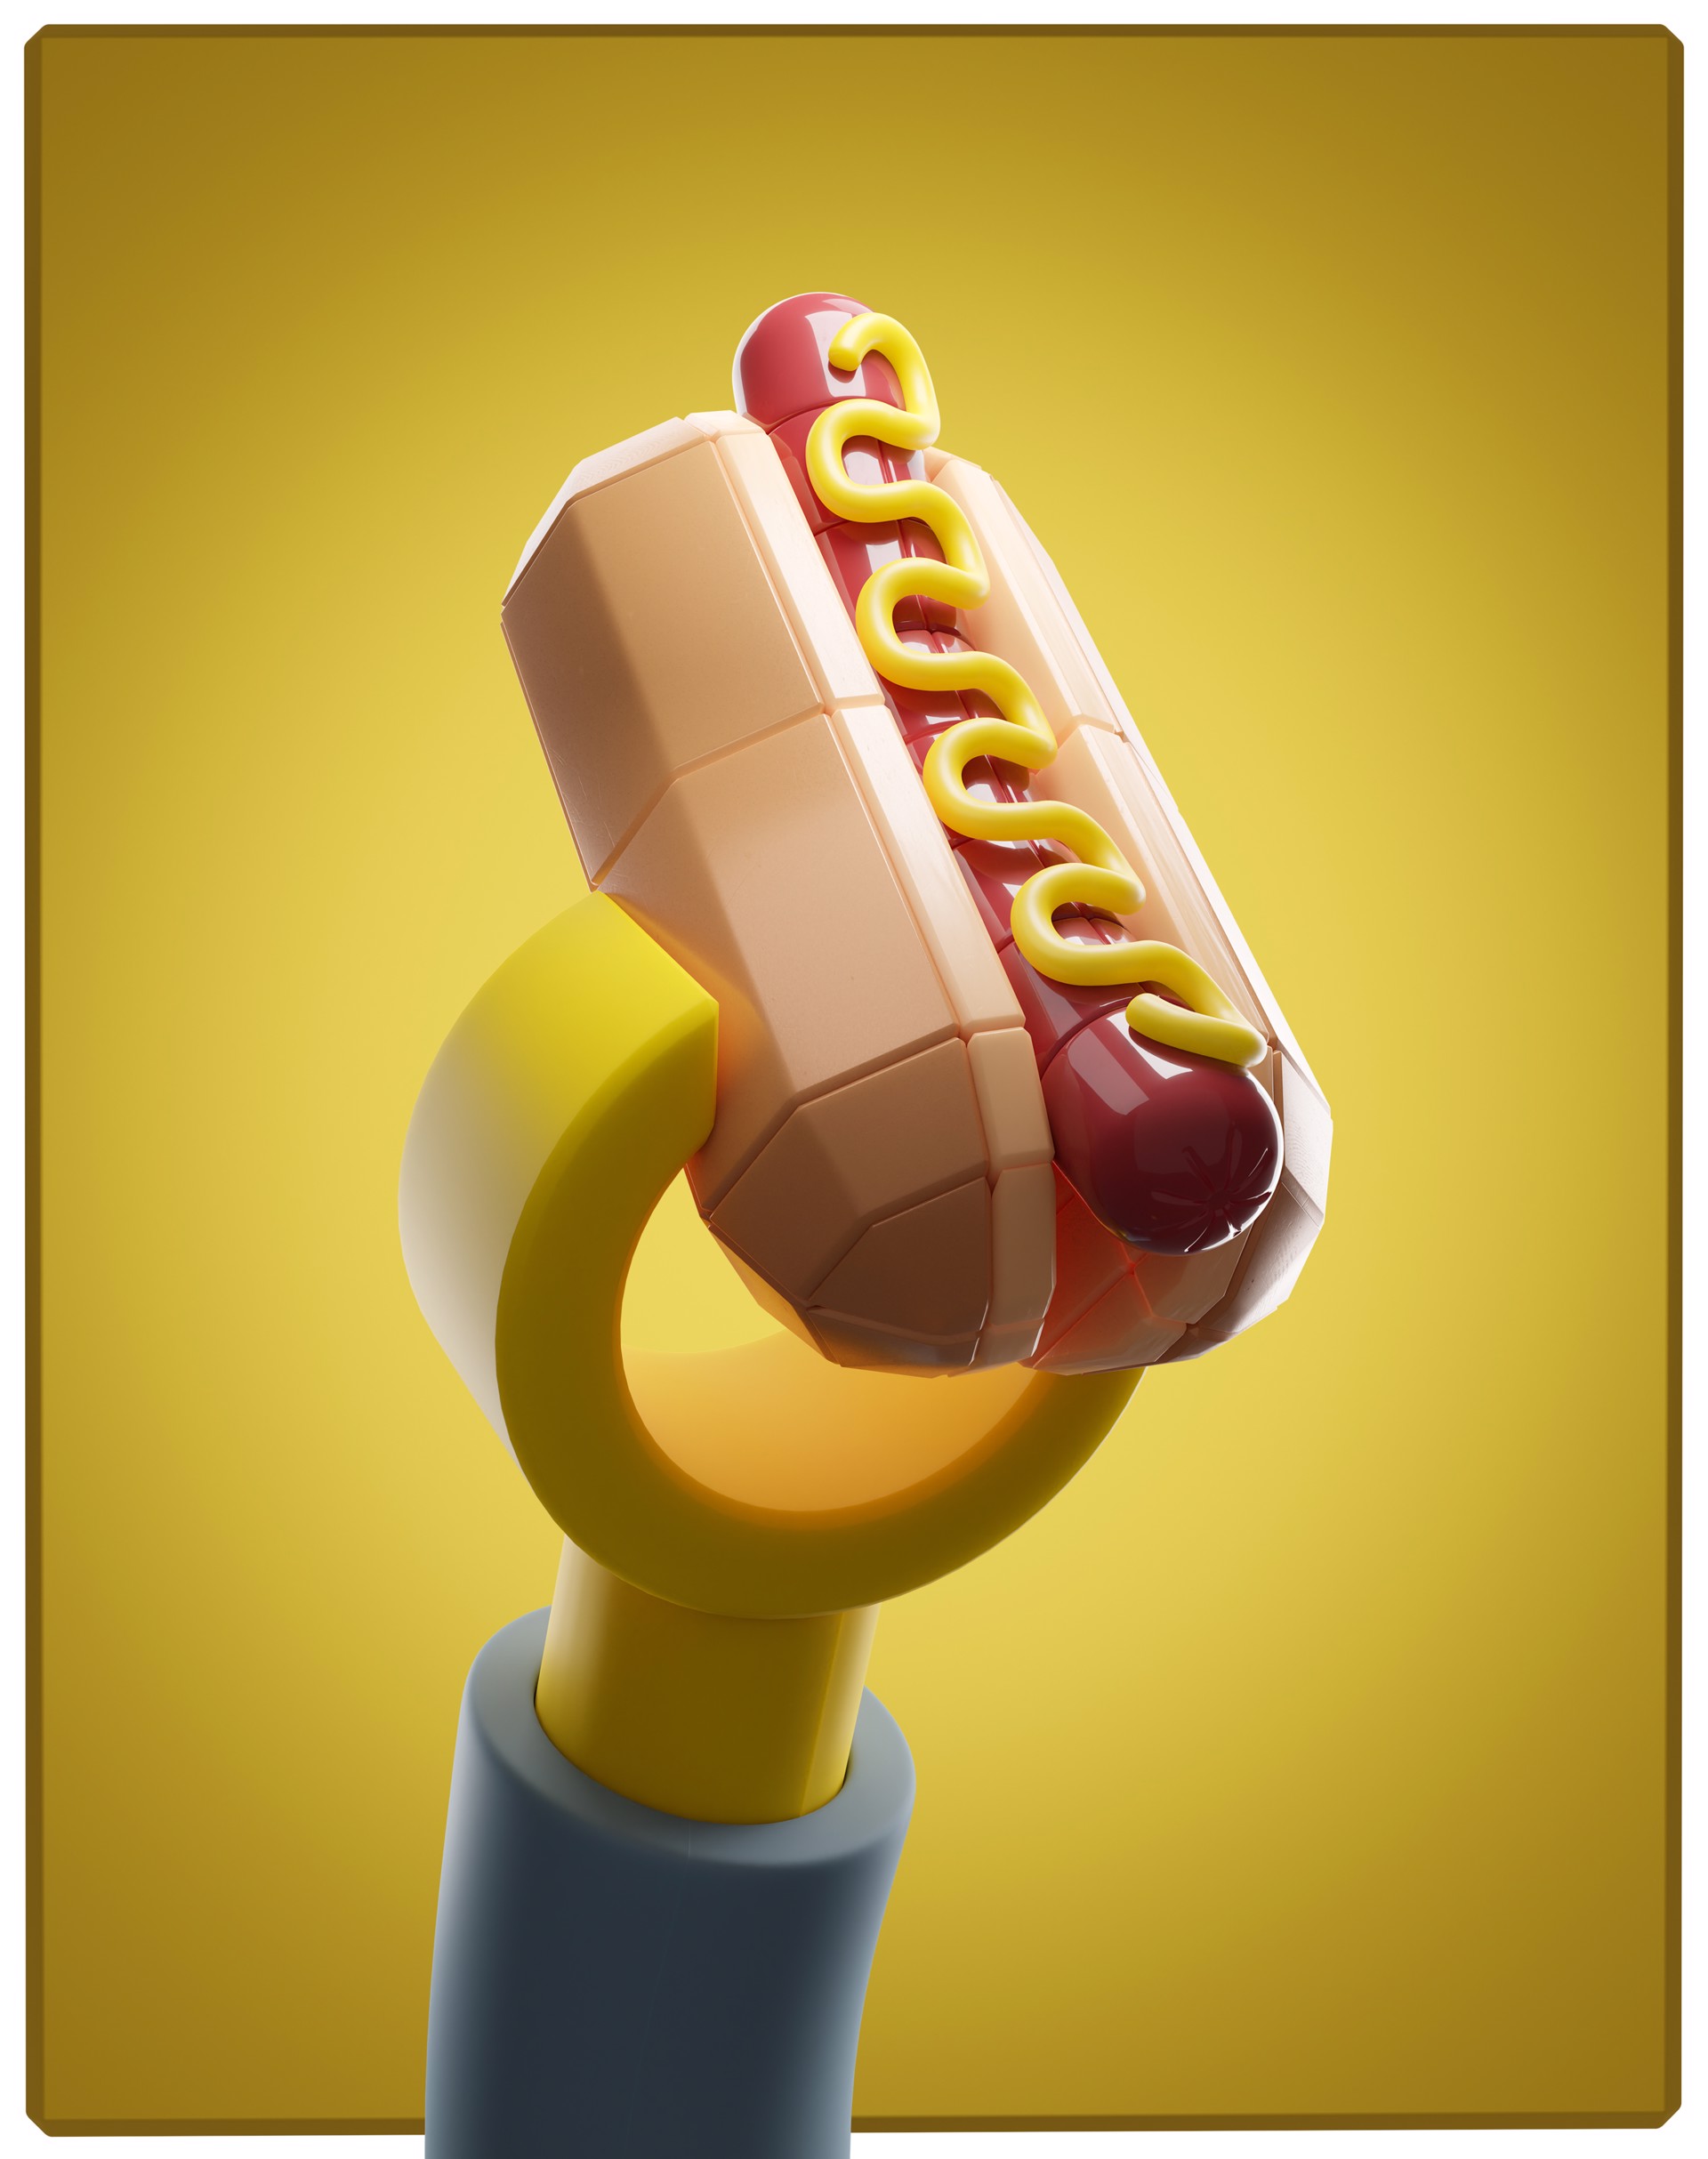 Hot Dog! by Eli Warren